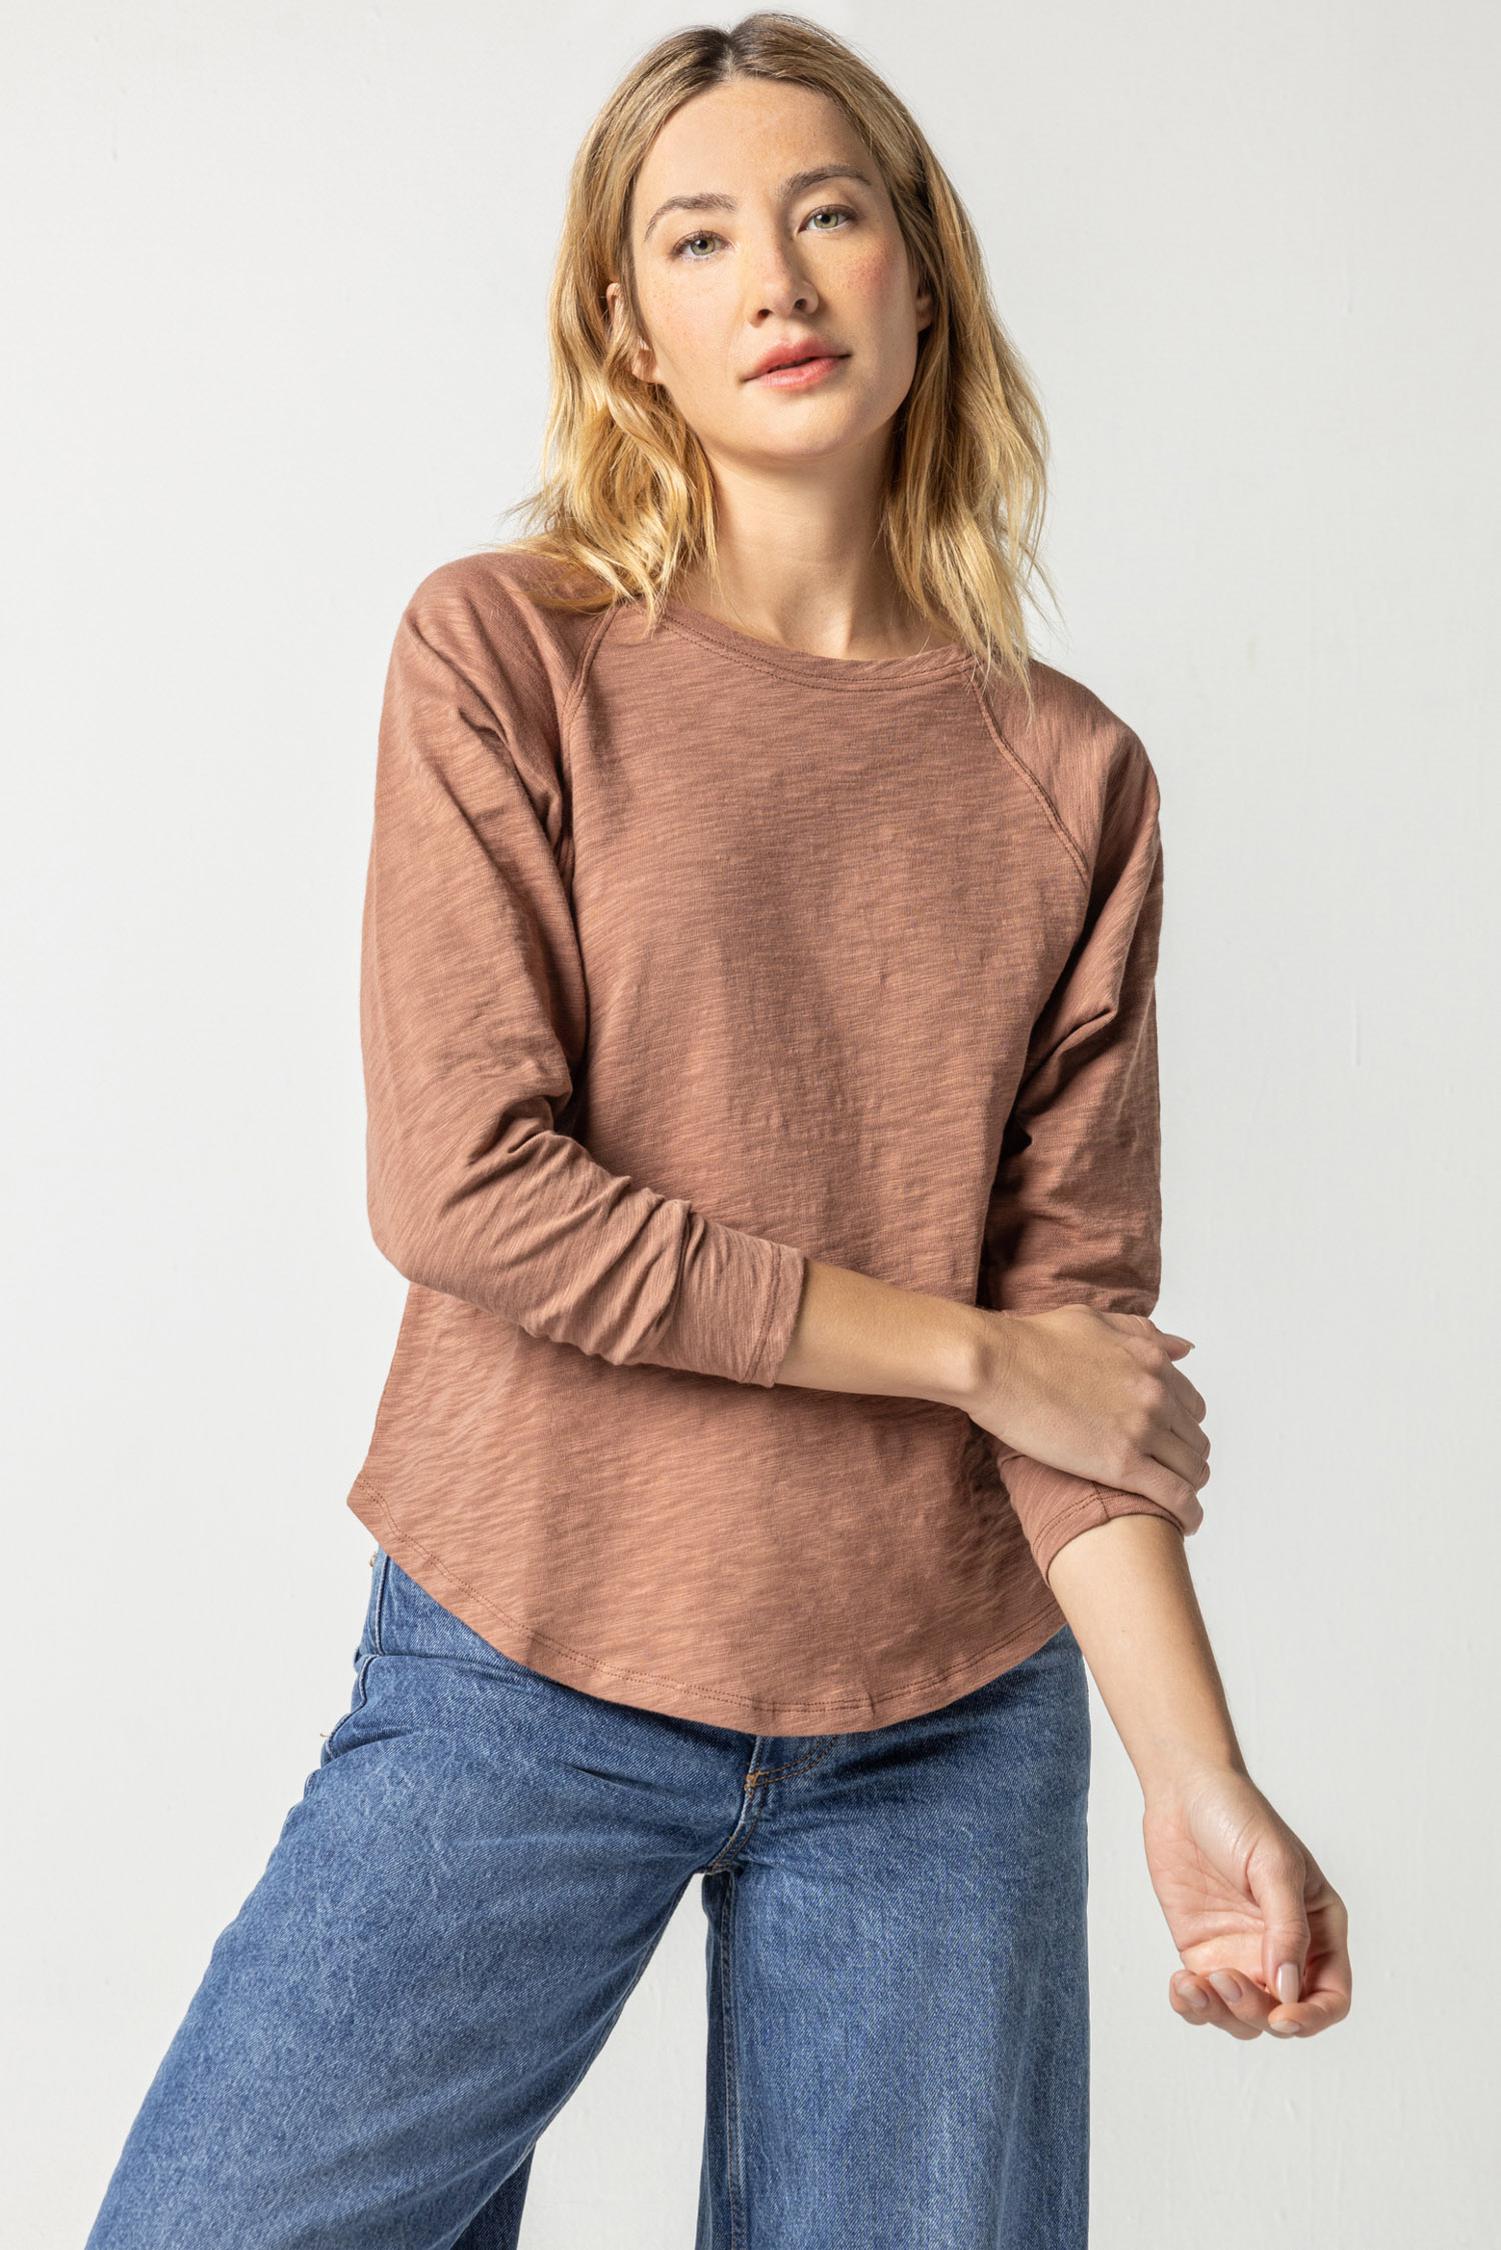 Alacki Women Sexy Tight Crop Tops Long Sleeves Low-cut Stretch T-Shirt  Blouse 